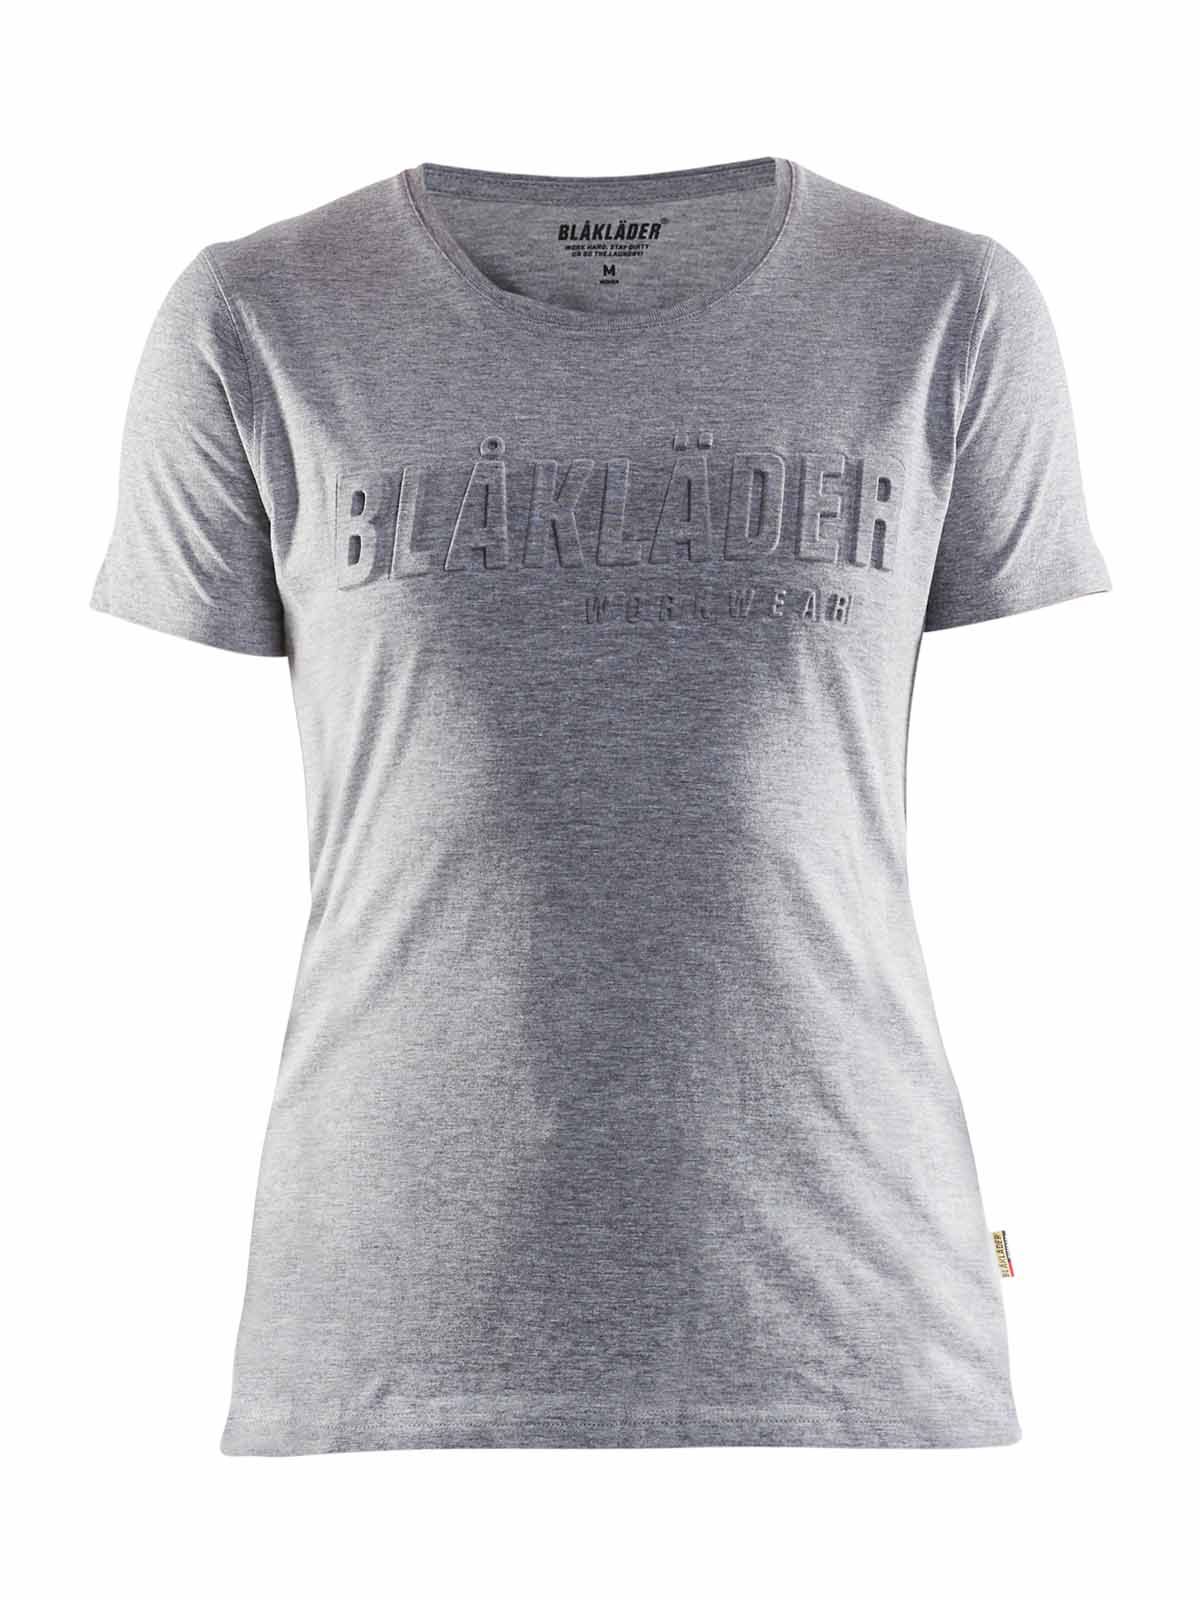 Beginner De Buitenlander 3431-1043 Women's Work T-Shirt 3D Logo - Grey Melange 9000 - Blåkläder